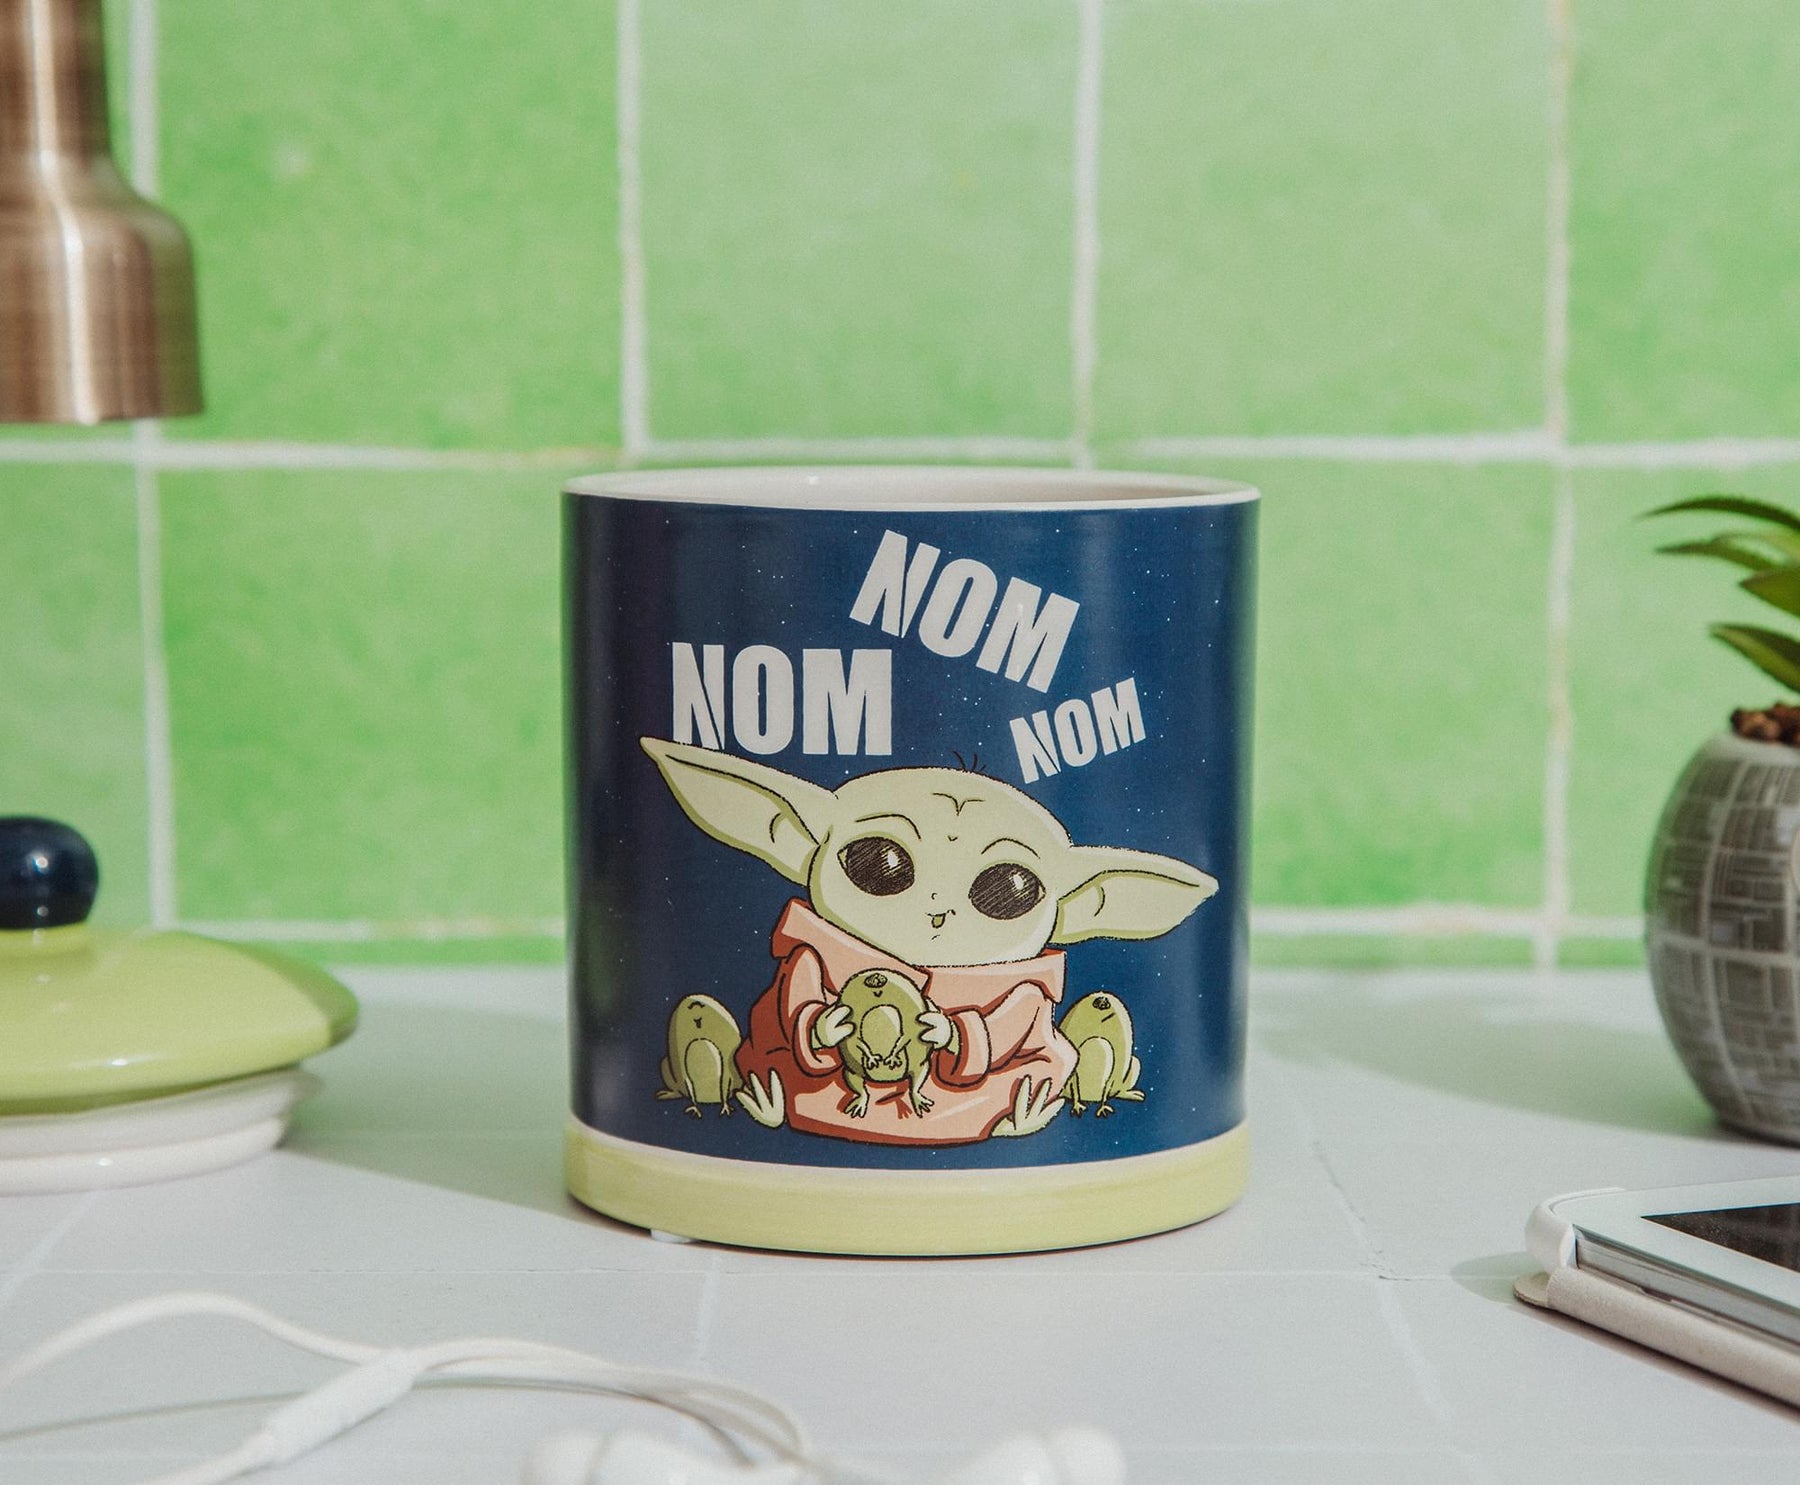 Star Wars: The Mandalorian Grogu "Nom Nom Nom" Frogs Large Ceramic Cookie Jar